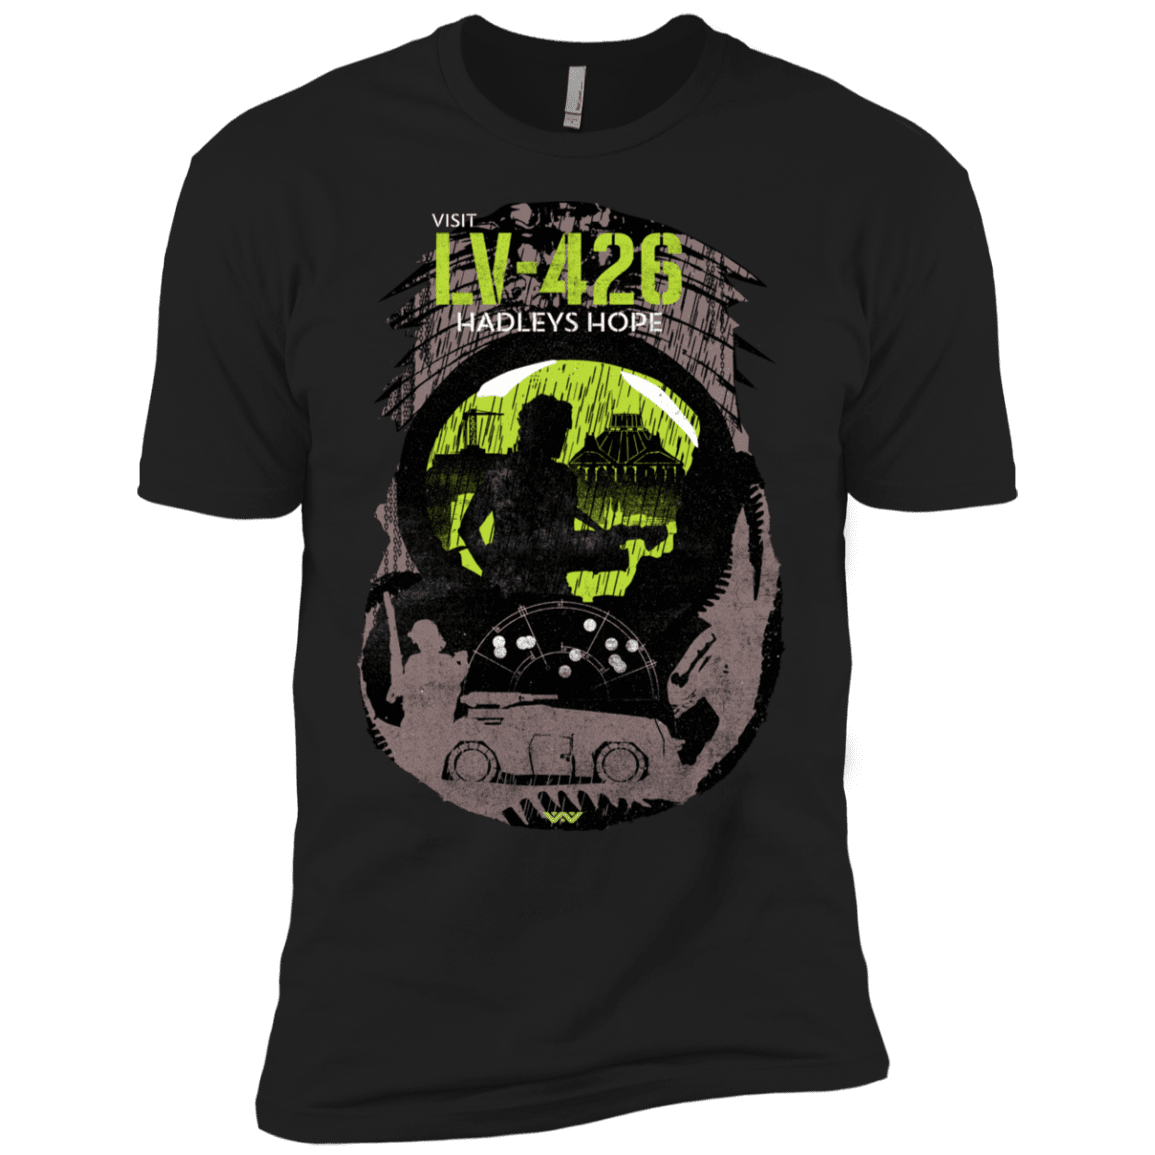 Visit LV-426 Boys Premium T-Shirt – Pop Up Tee